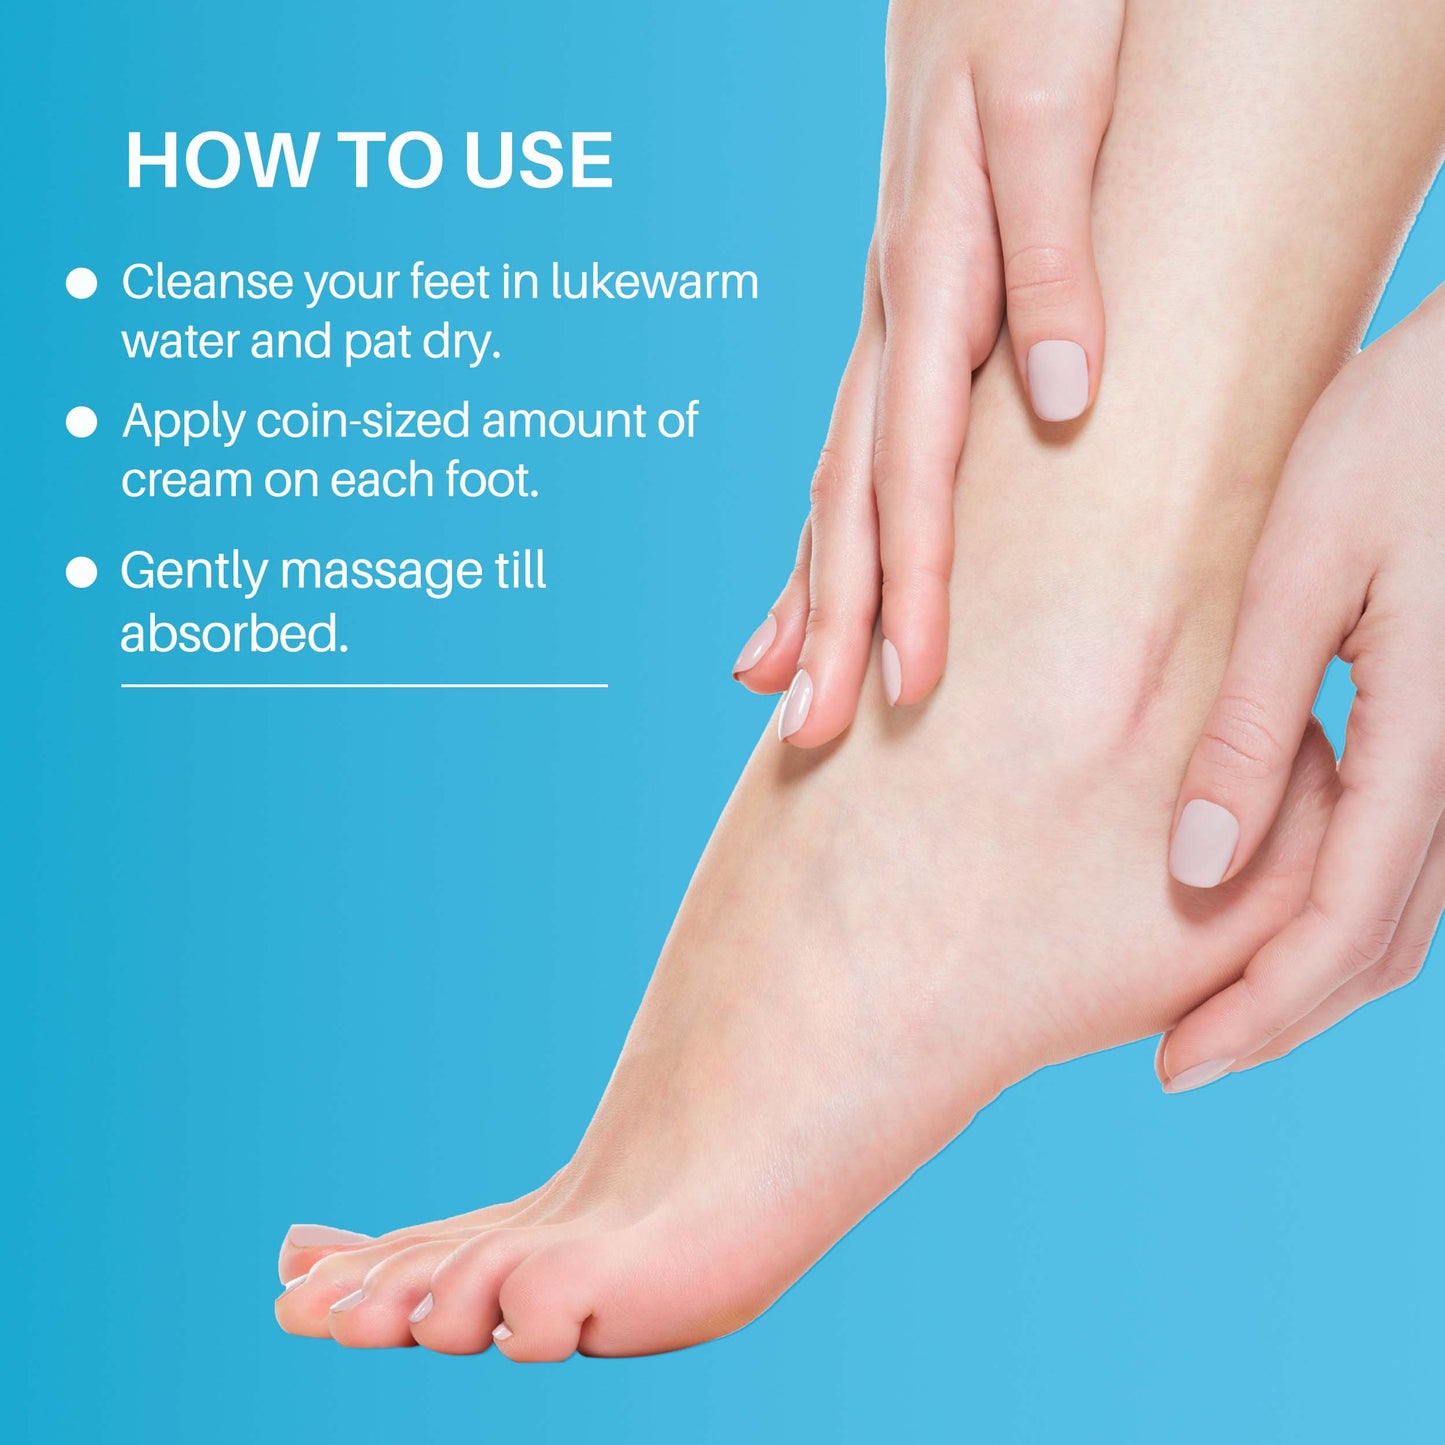 DermDoc 20% Urea Foot Cream For Nourished Feet (50g)